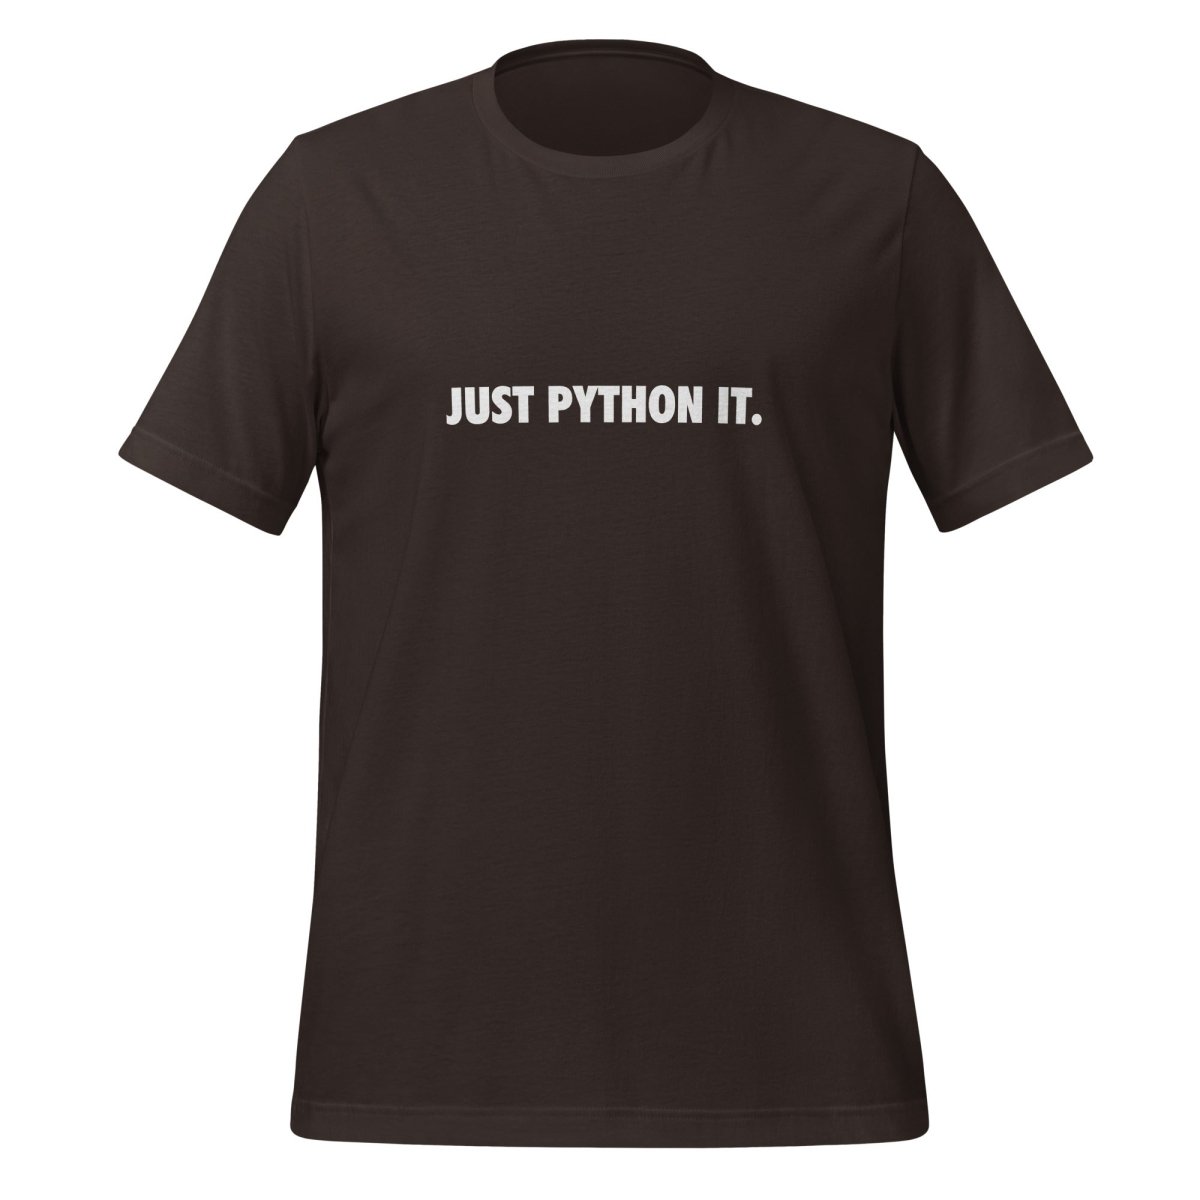 JUST PYTHON IT. T - Shirt (unisex) - Brown - AI Store